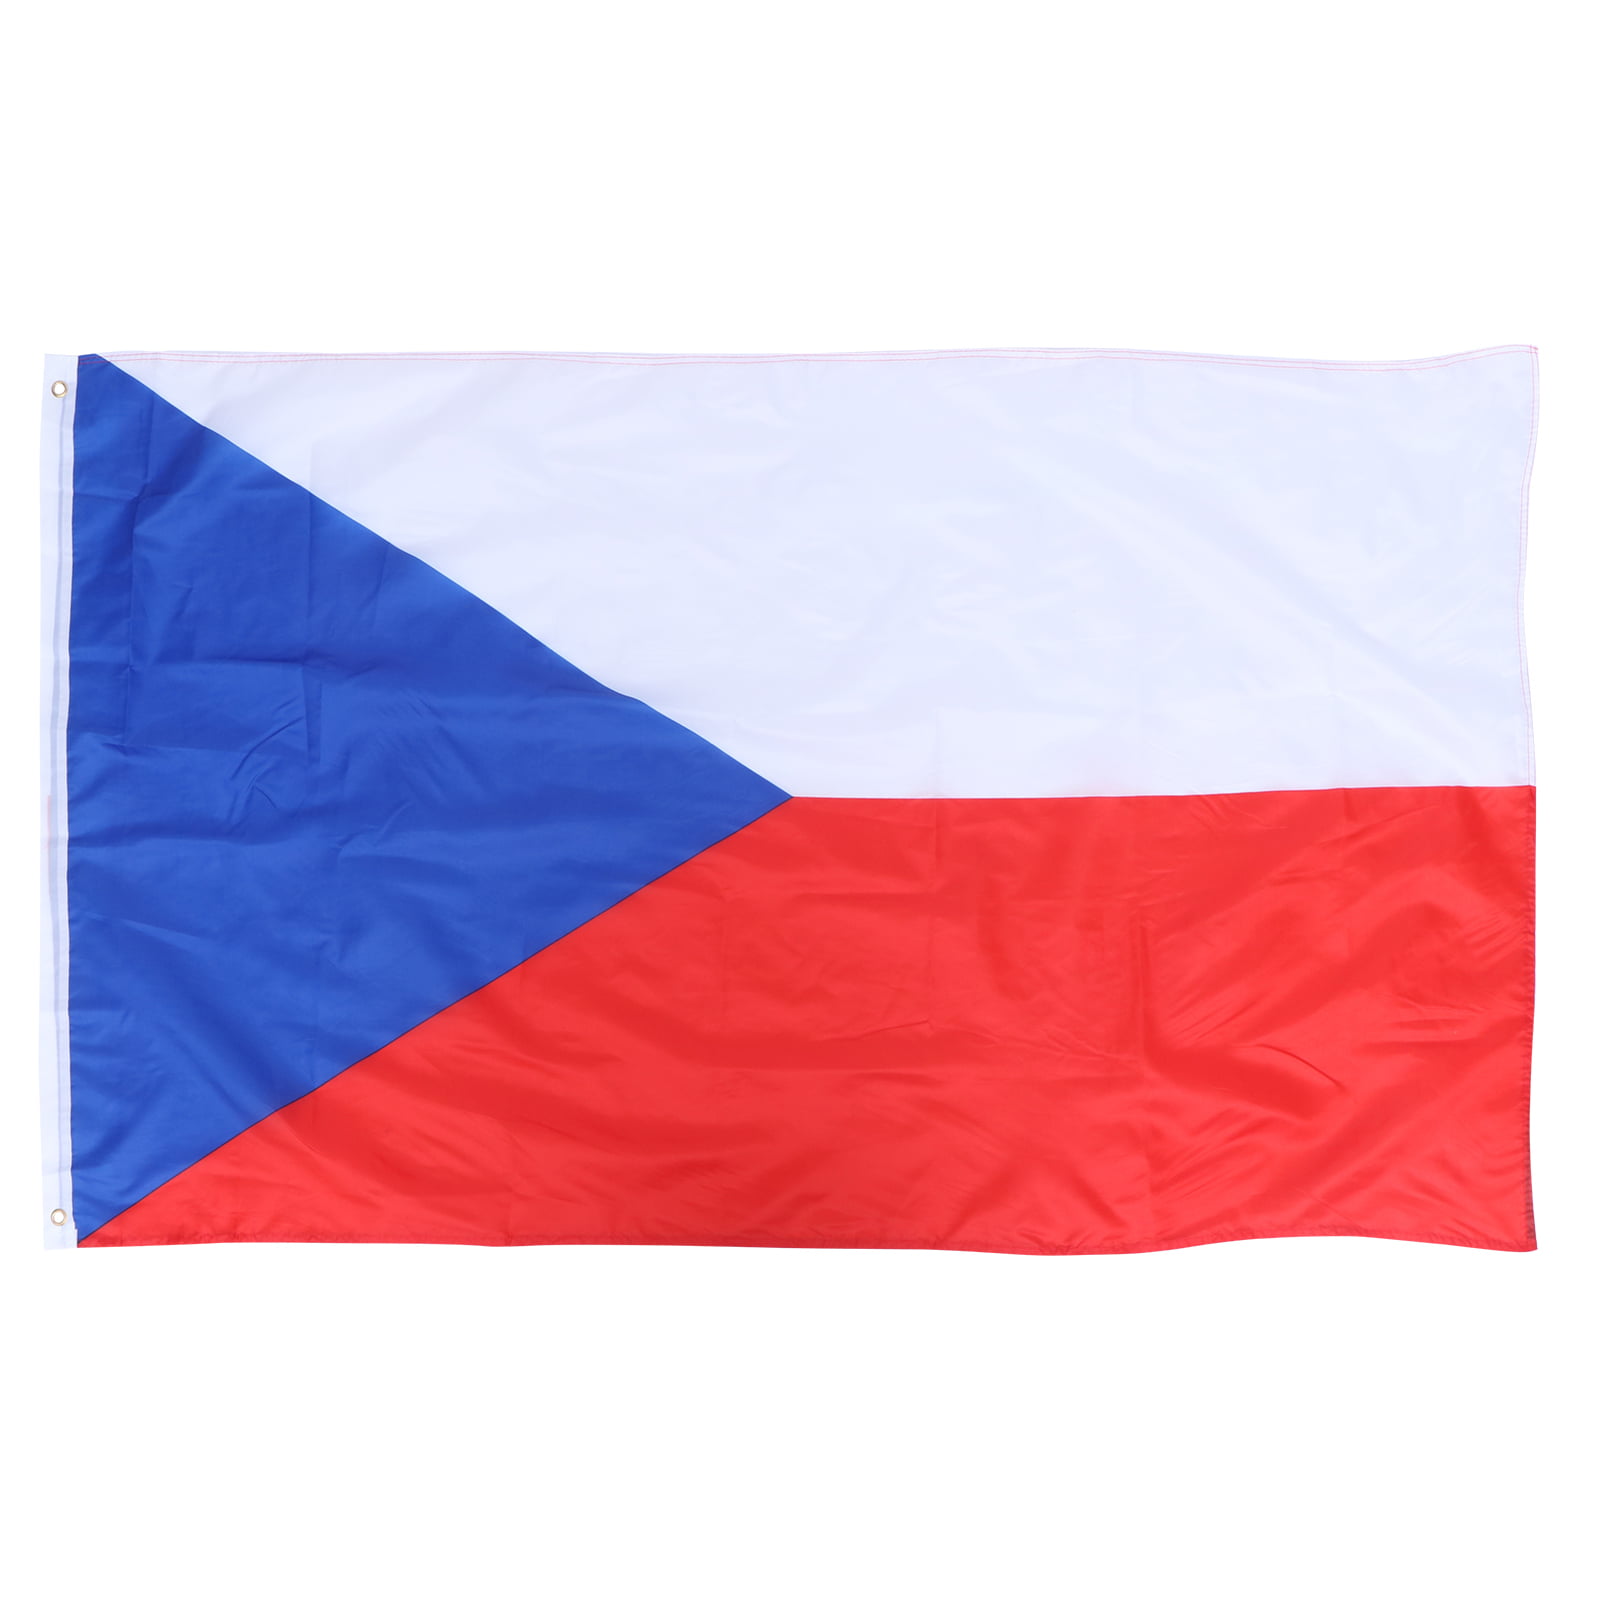 CZECH NATIONAL FLAG OF CZECH REPUBLIC 5ft x 3ft LARGE QUALITY FLAG NEW!! 